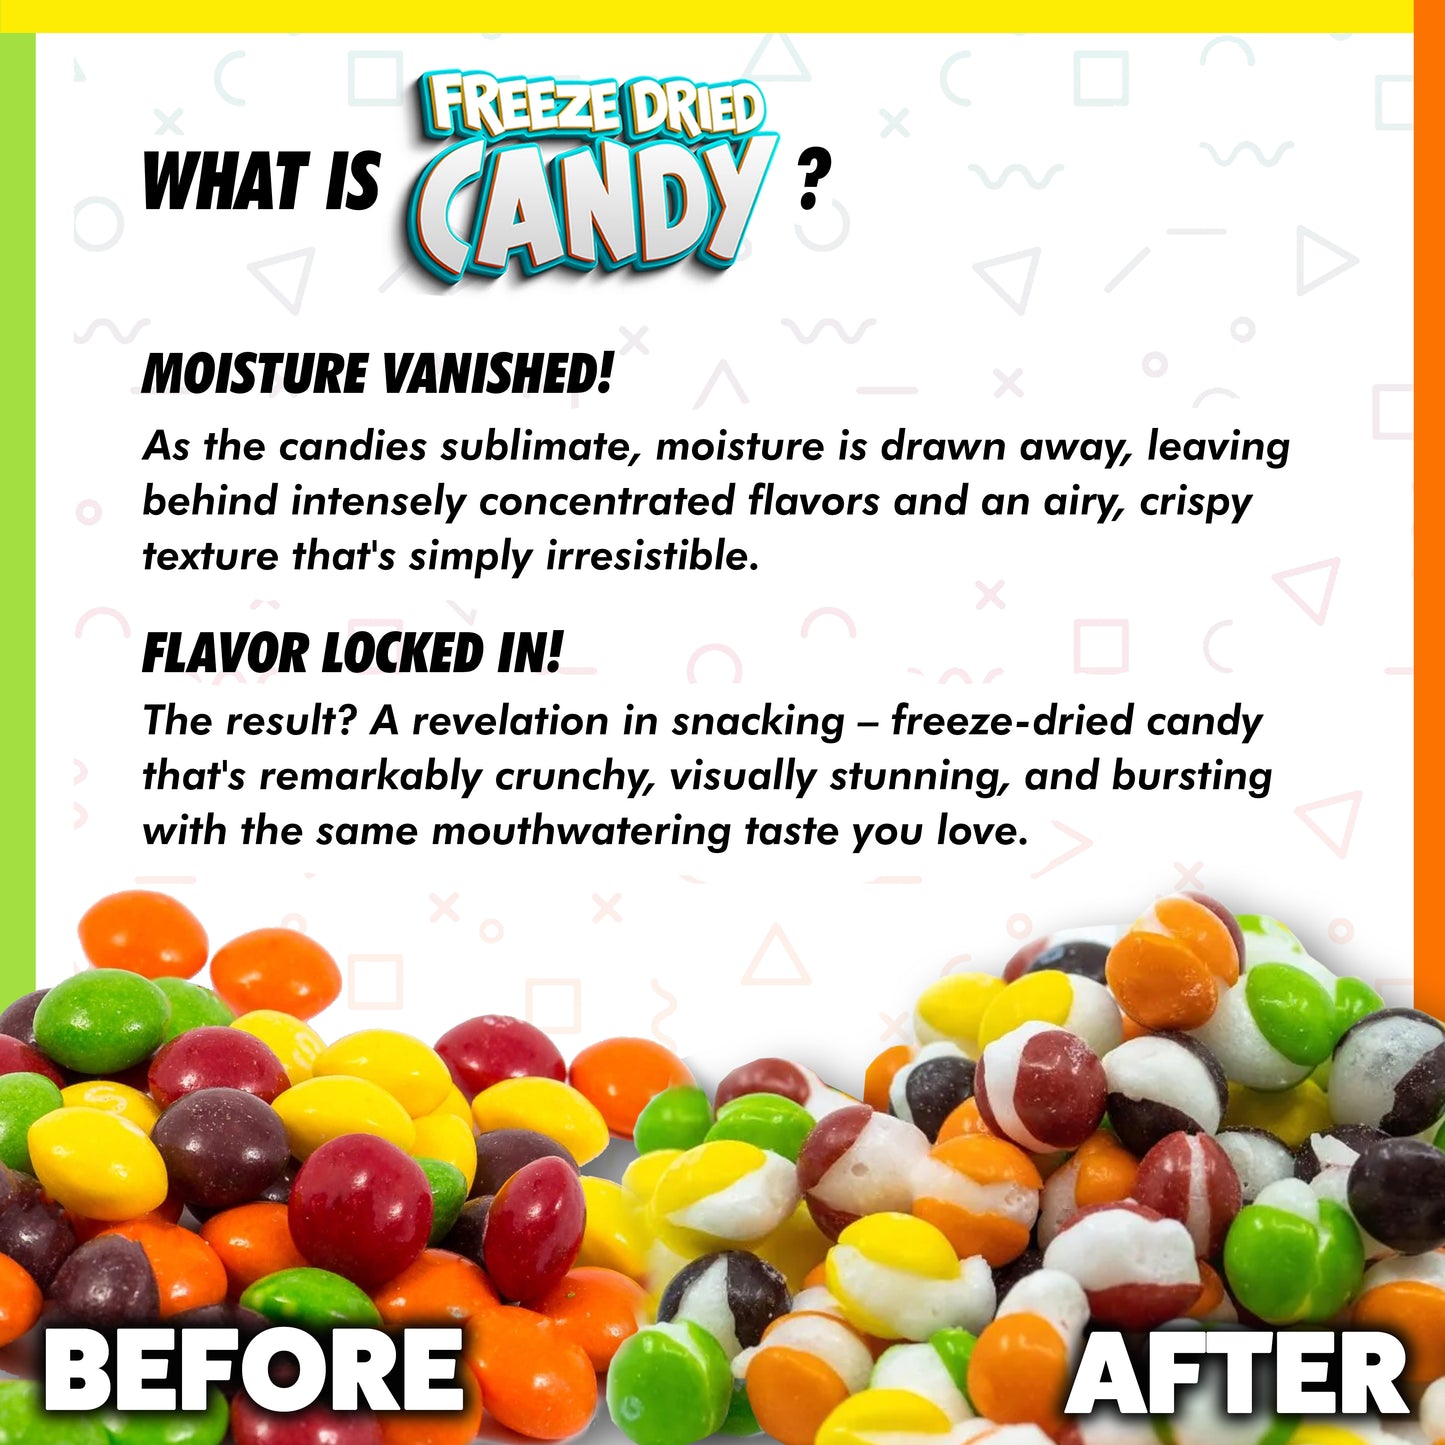 Freeze Dried Candy Fruity Sugar Free Gummy Bear Variety Pack Crunch Treats, 2 oz